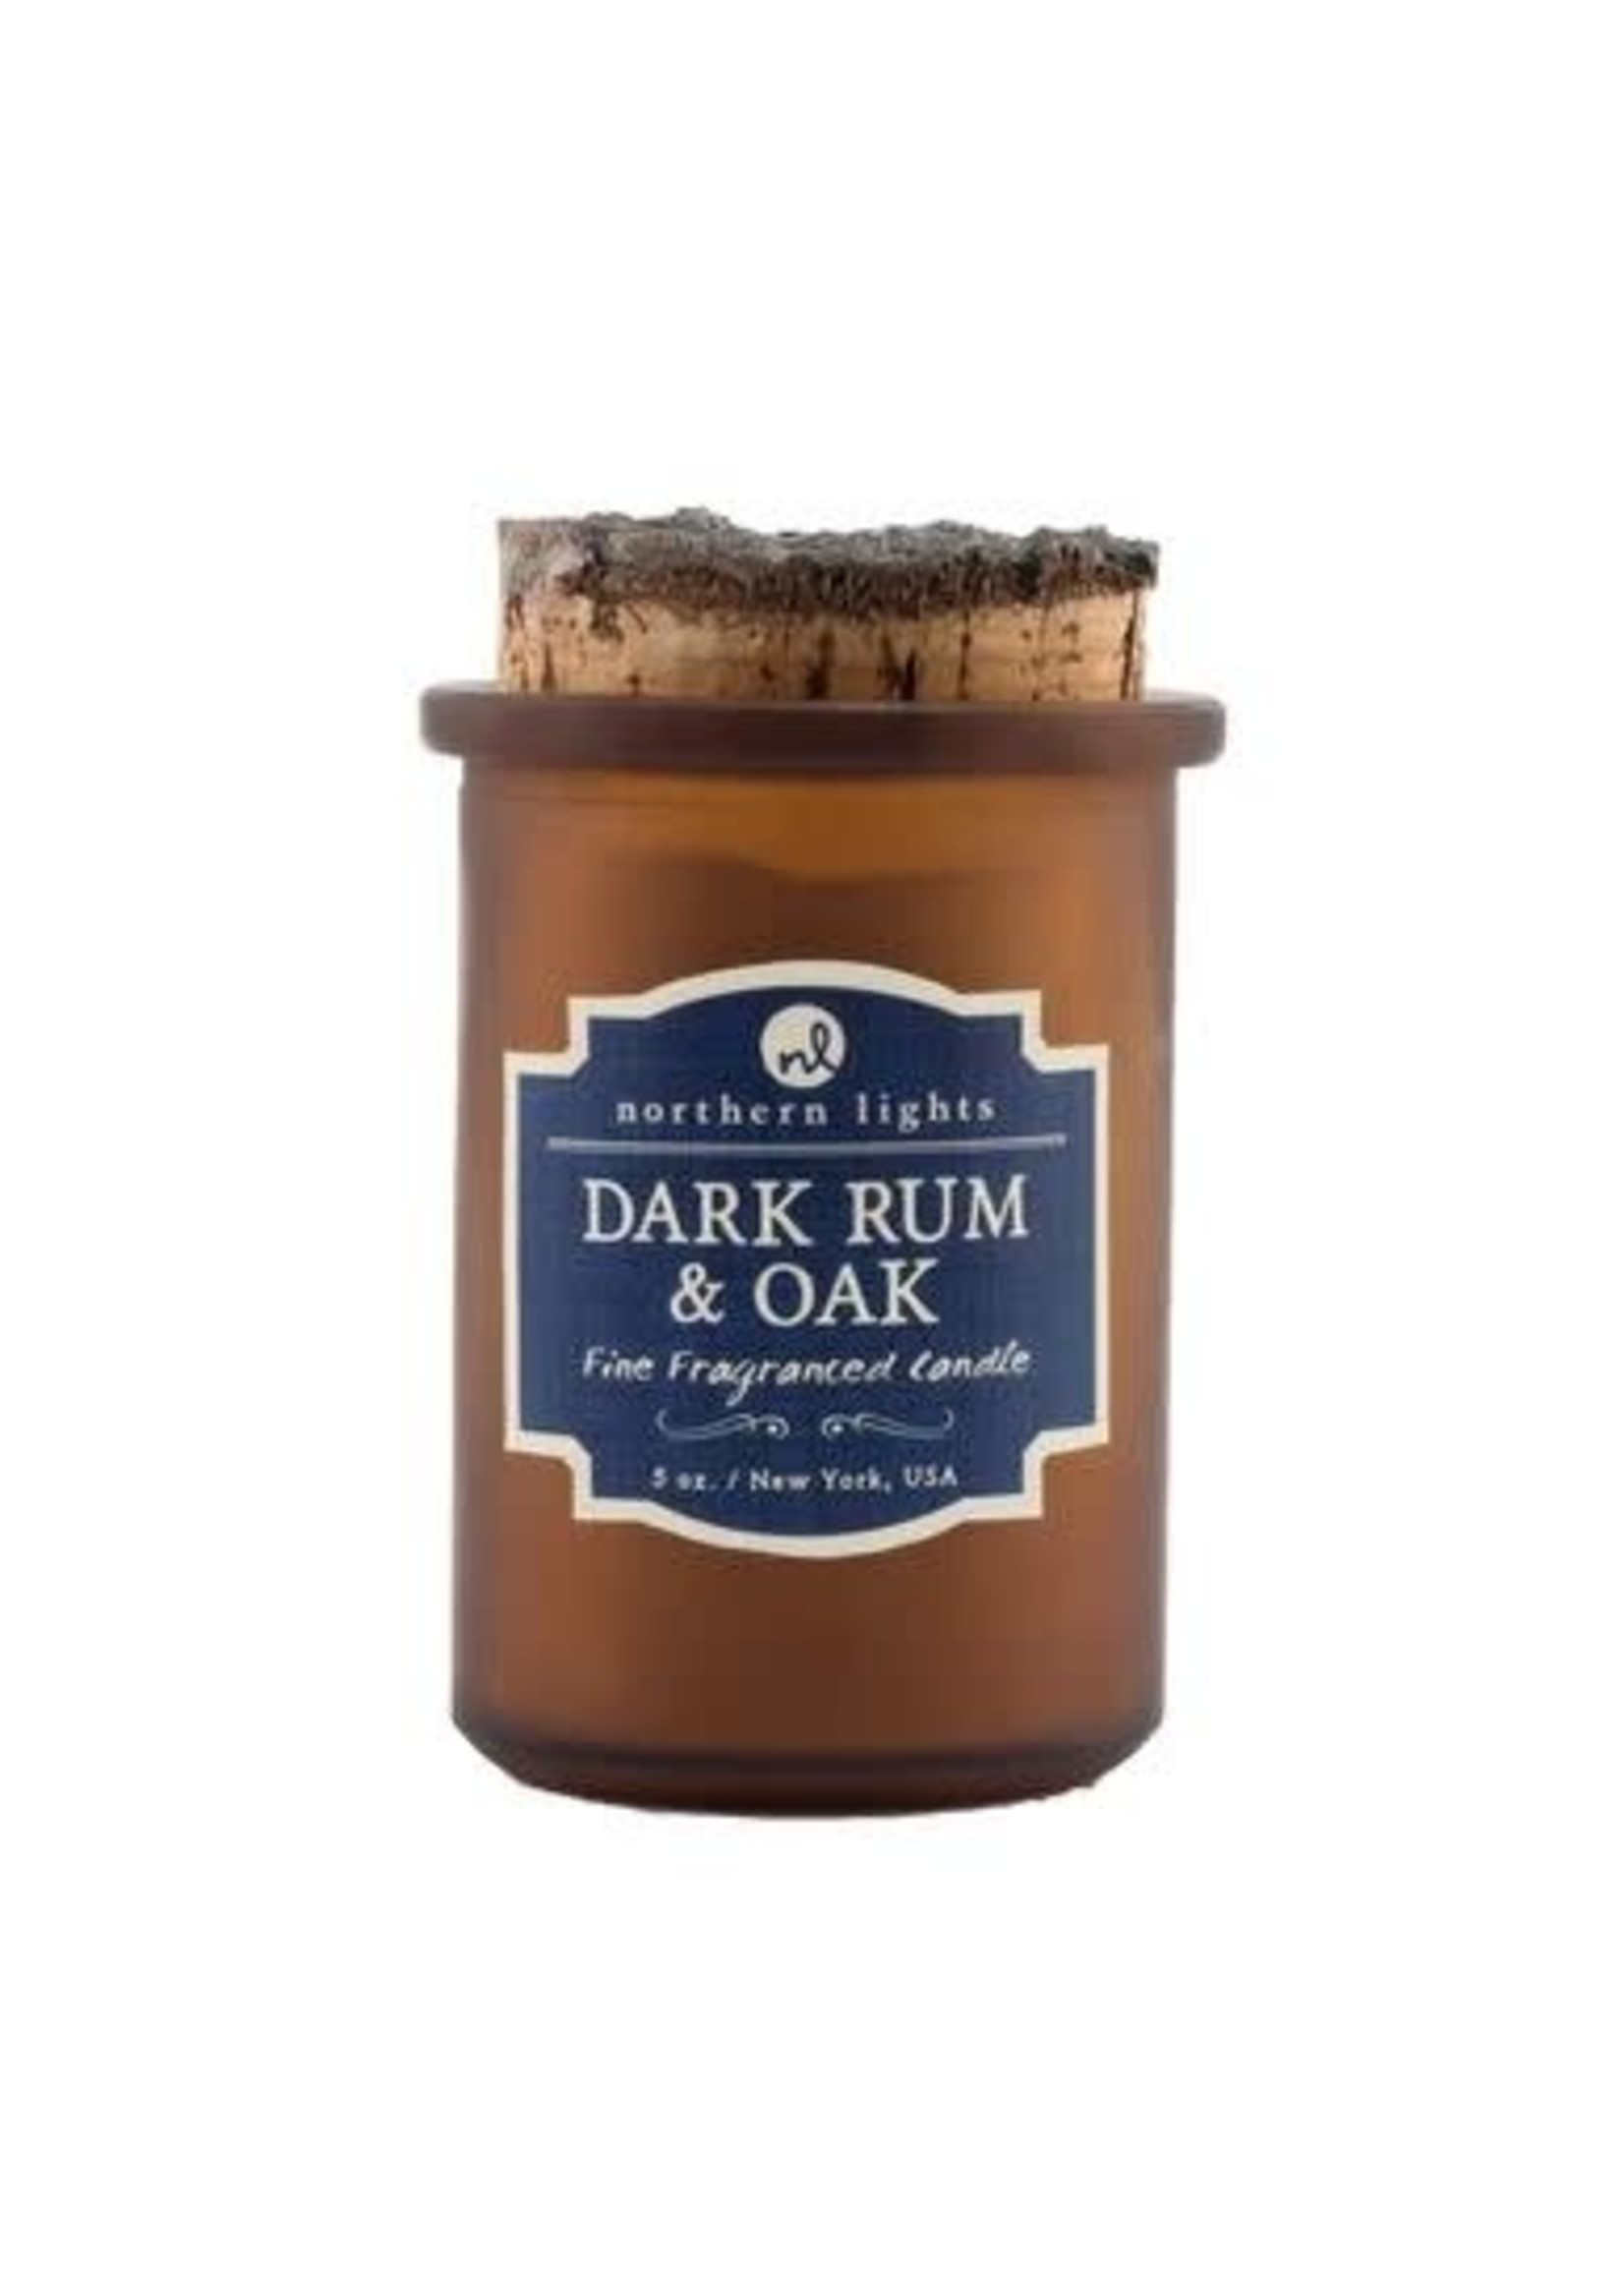 Northern Lights Spirit Jar Candle - Dark Rum and Oak